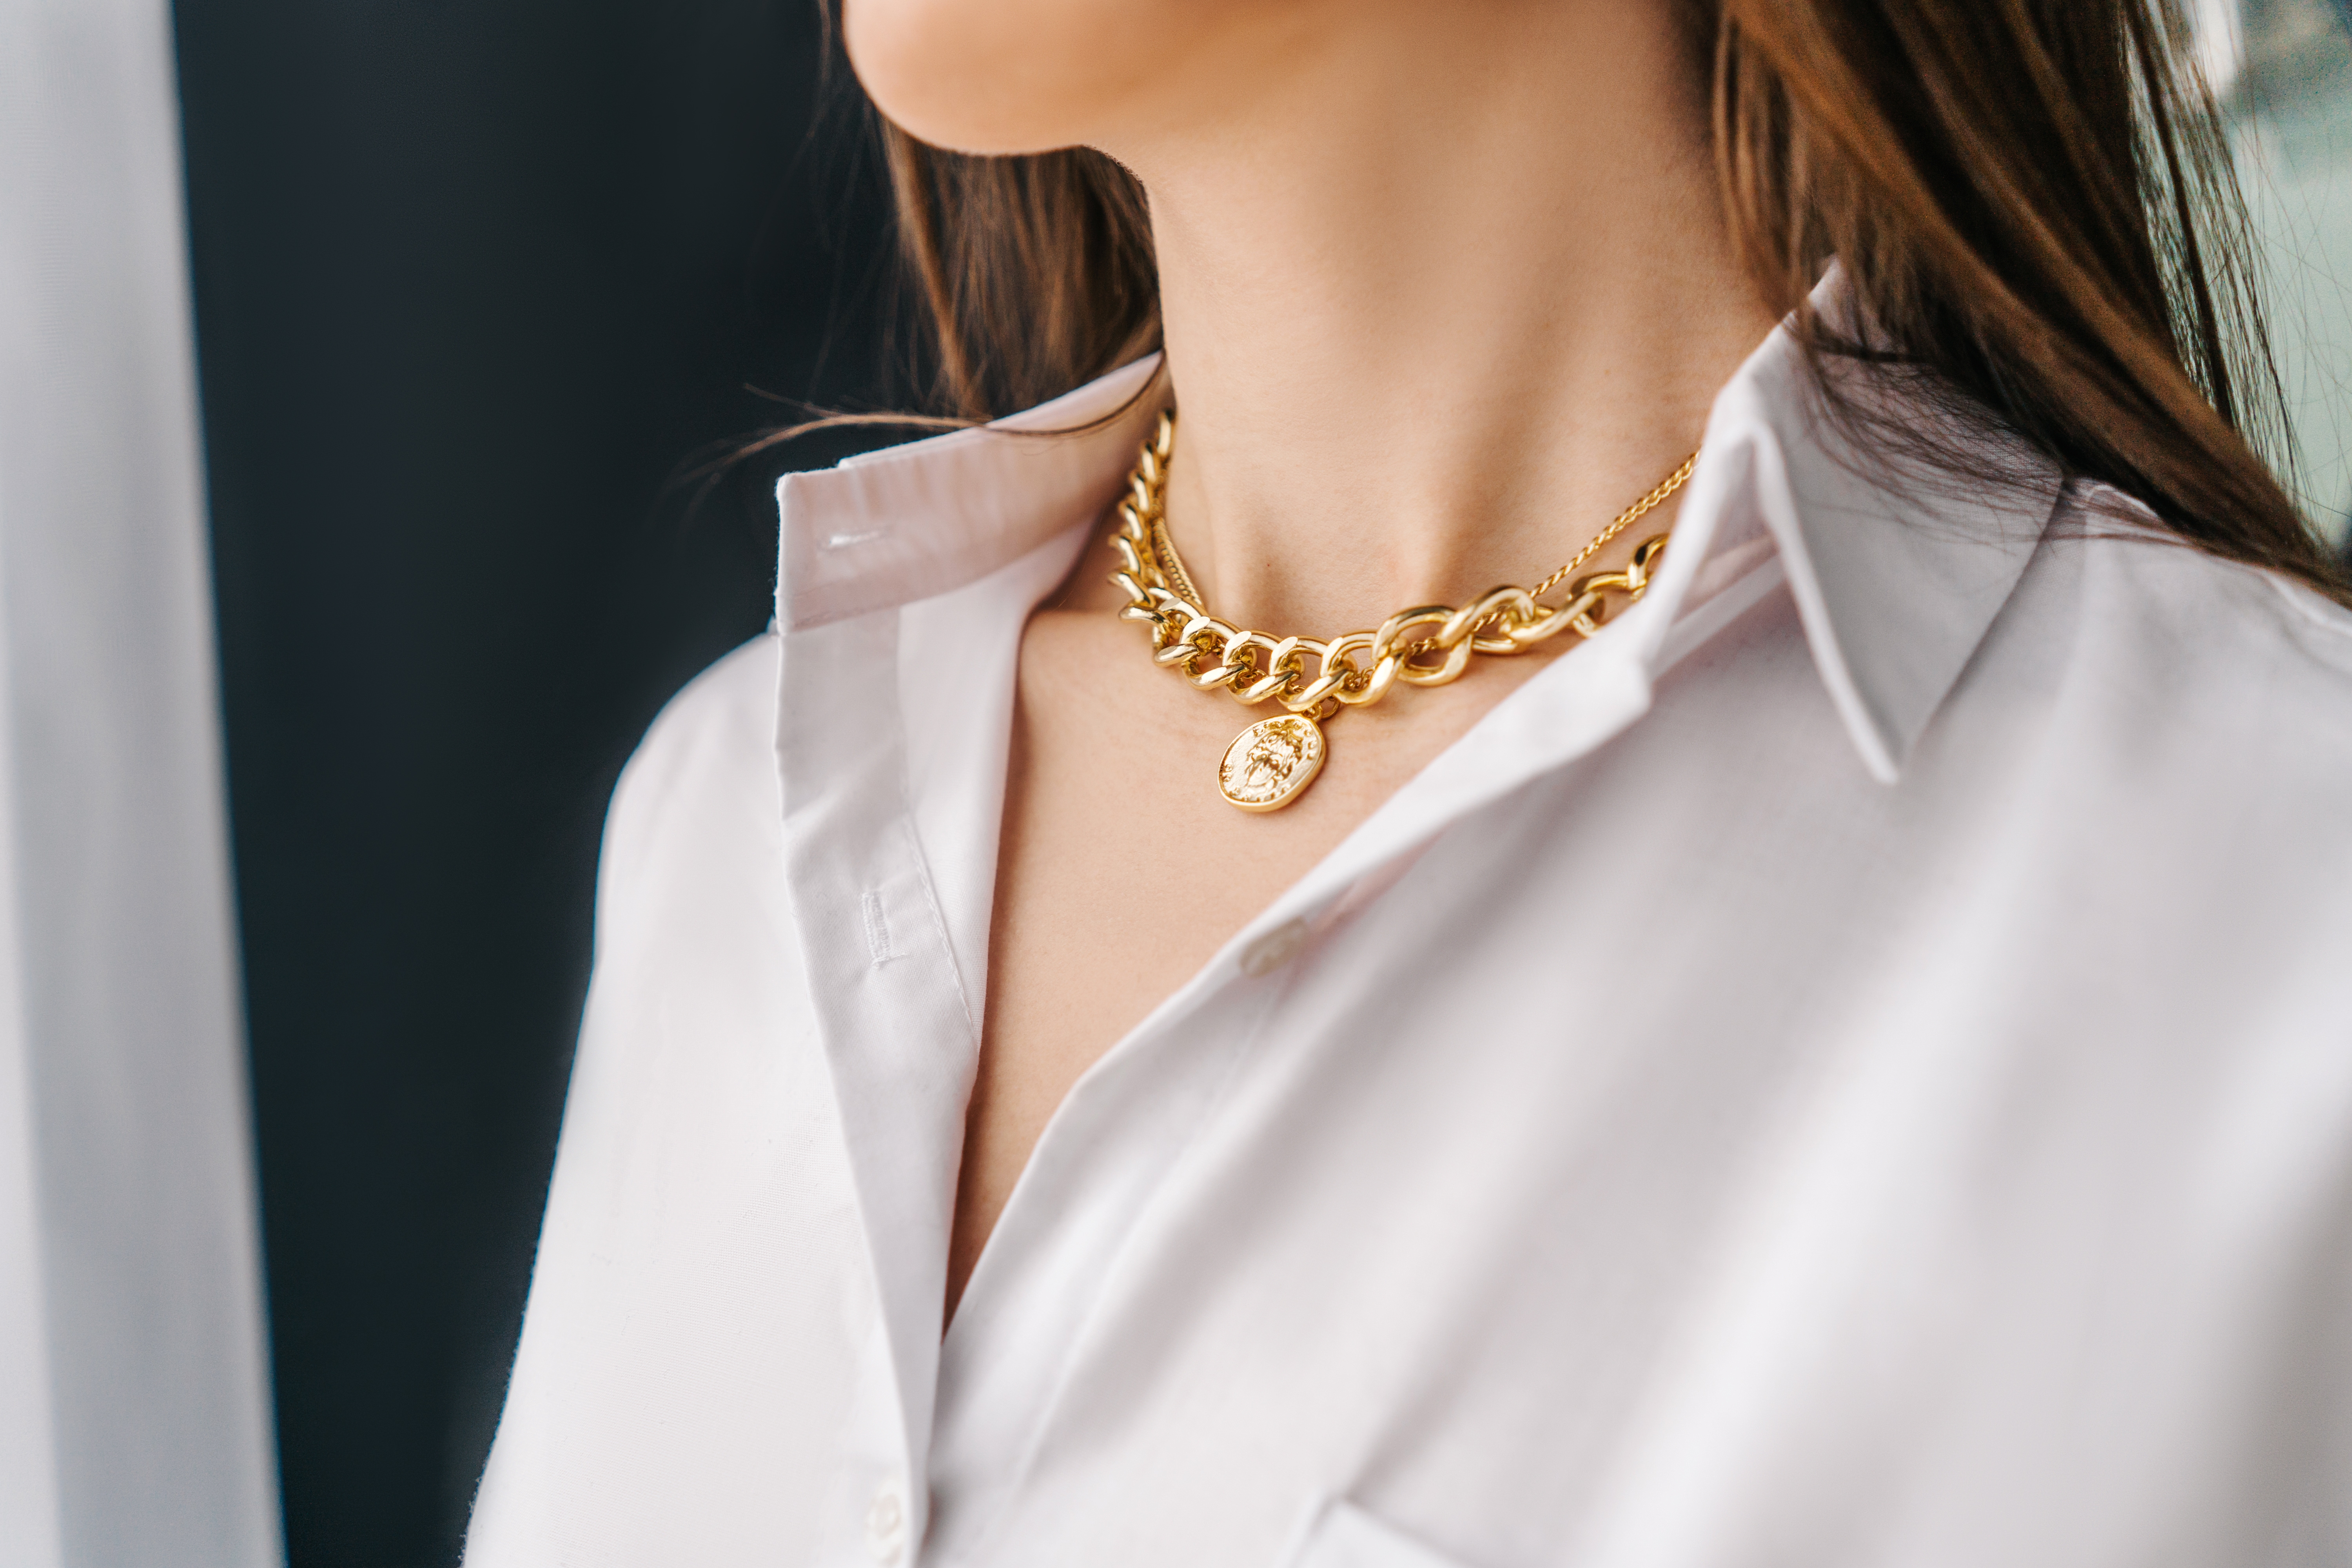 Femme portant un collier | Source : Shutterstock